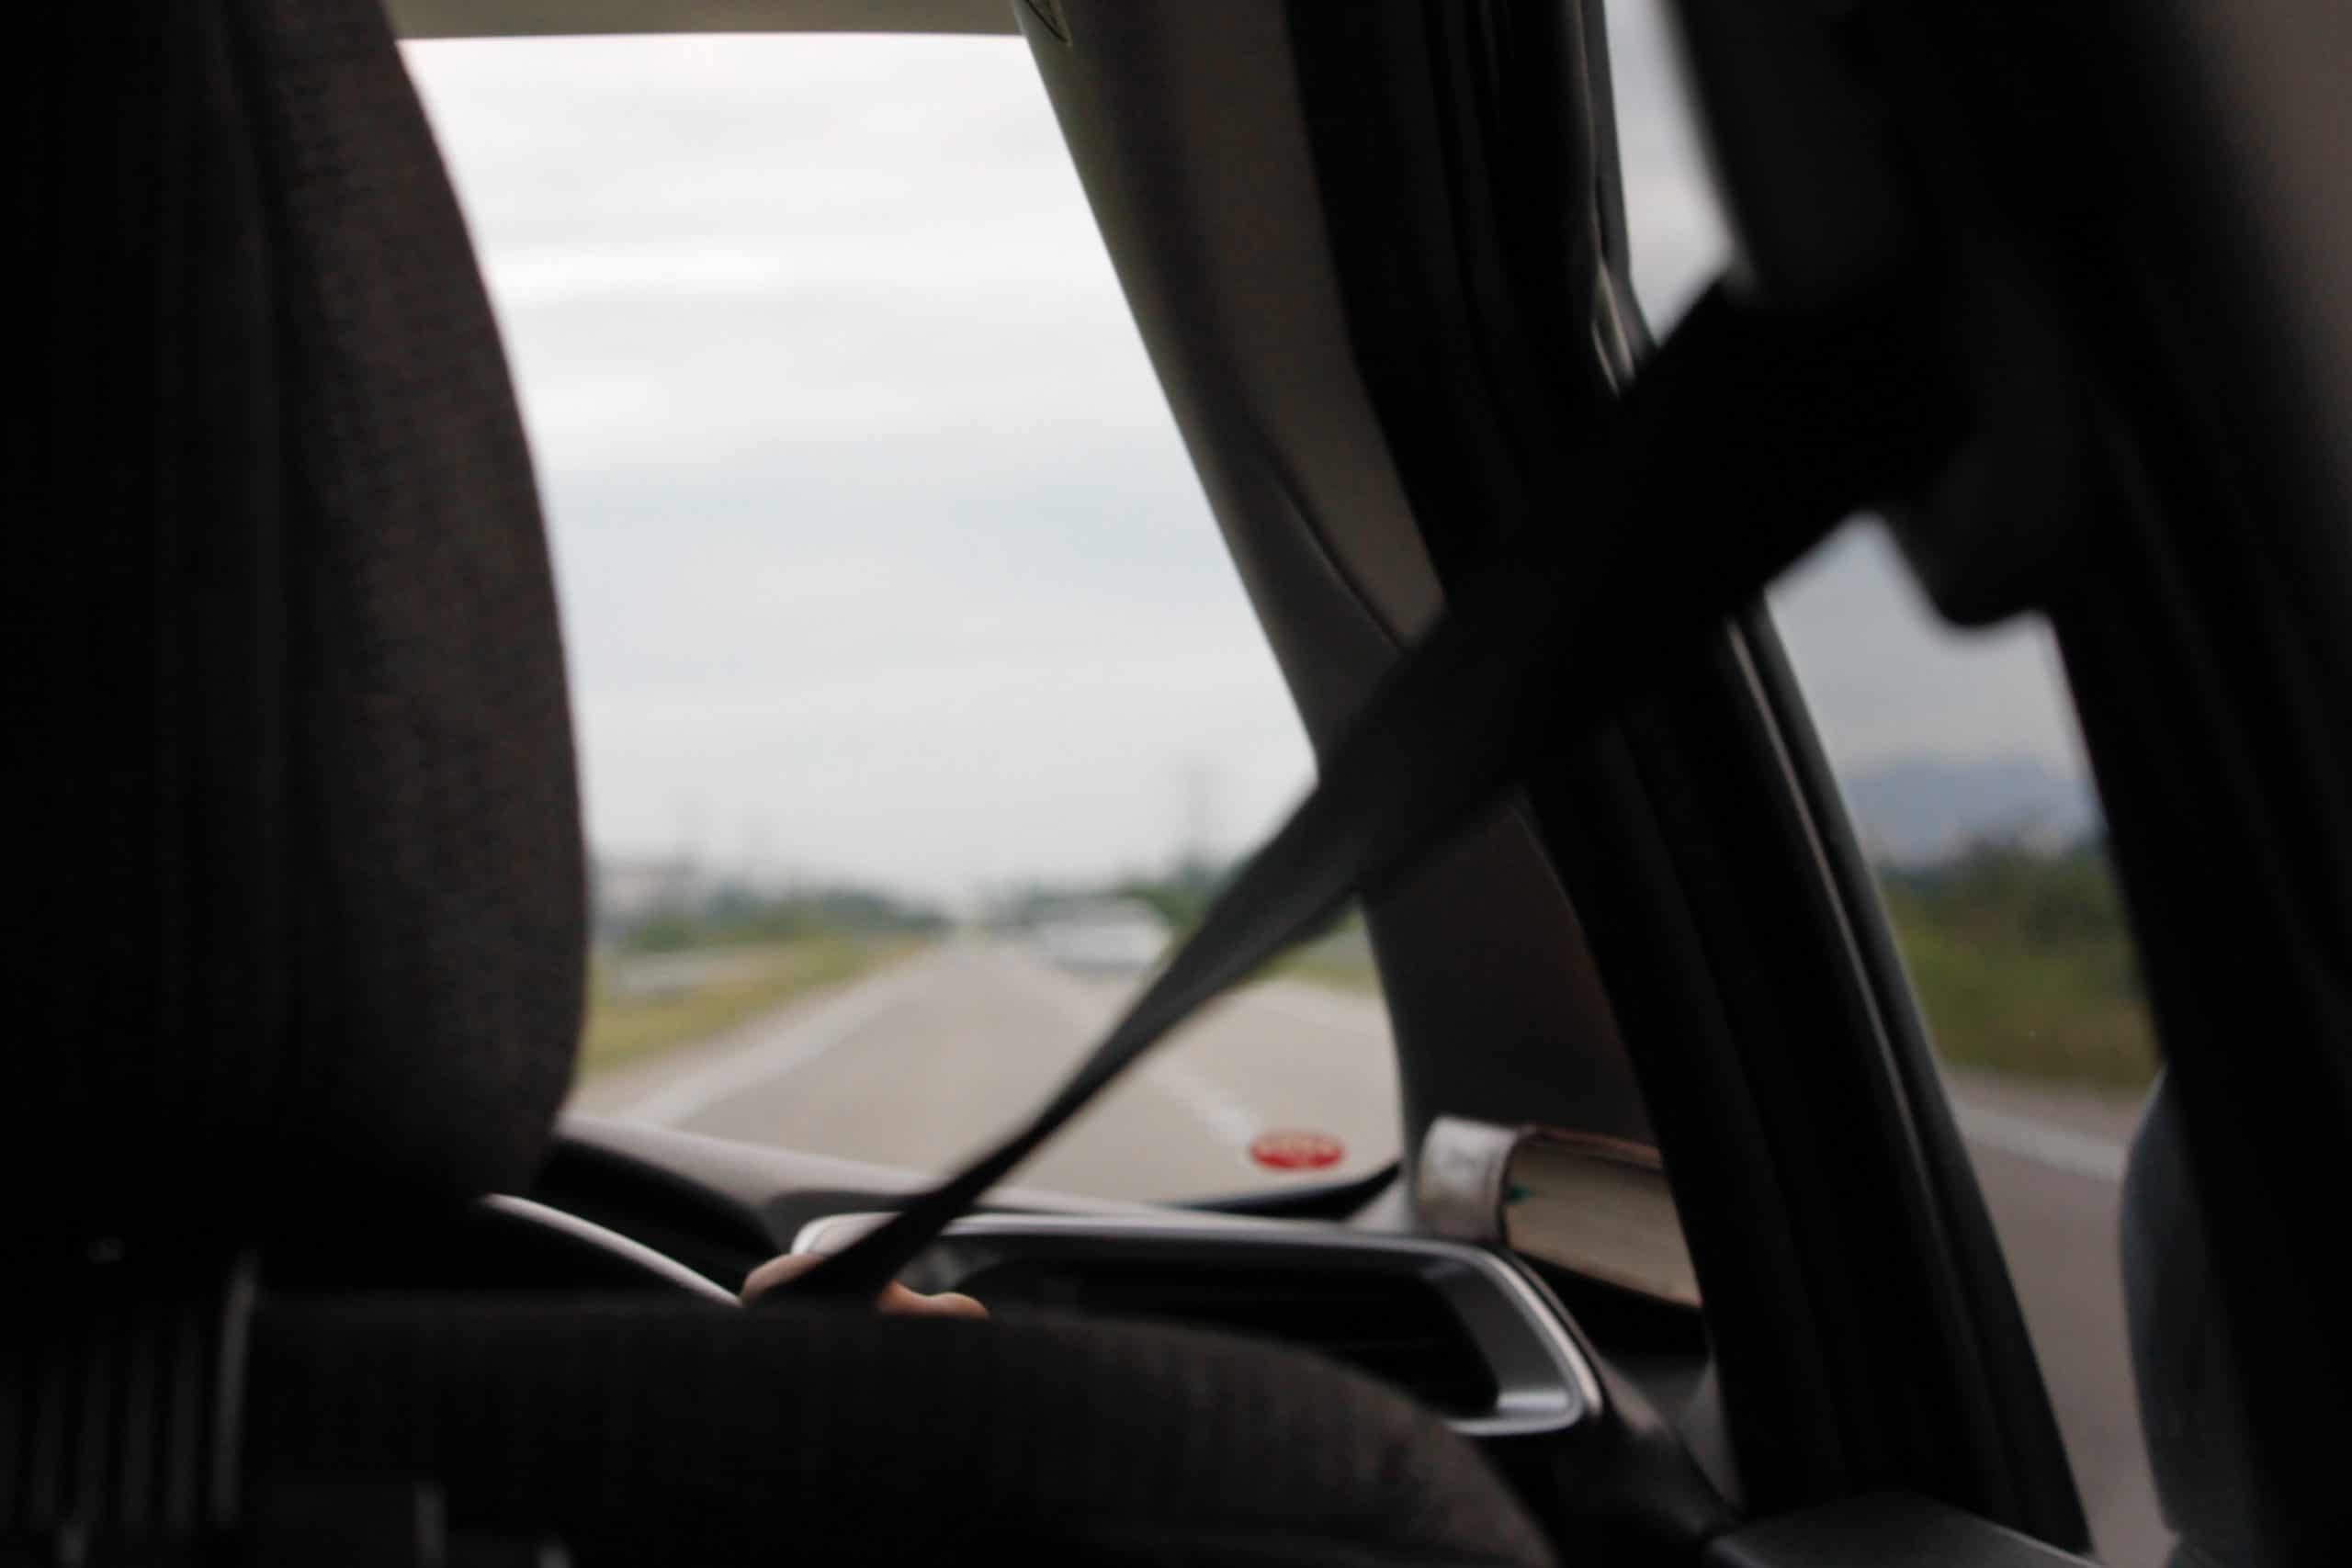 Replacing a Seat Belt - BreakerLink Blog